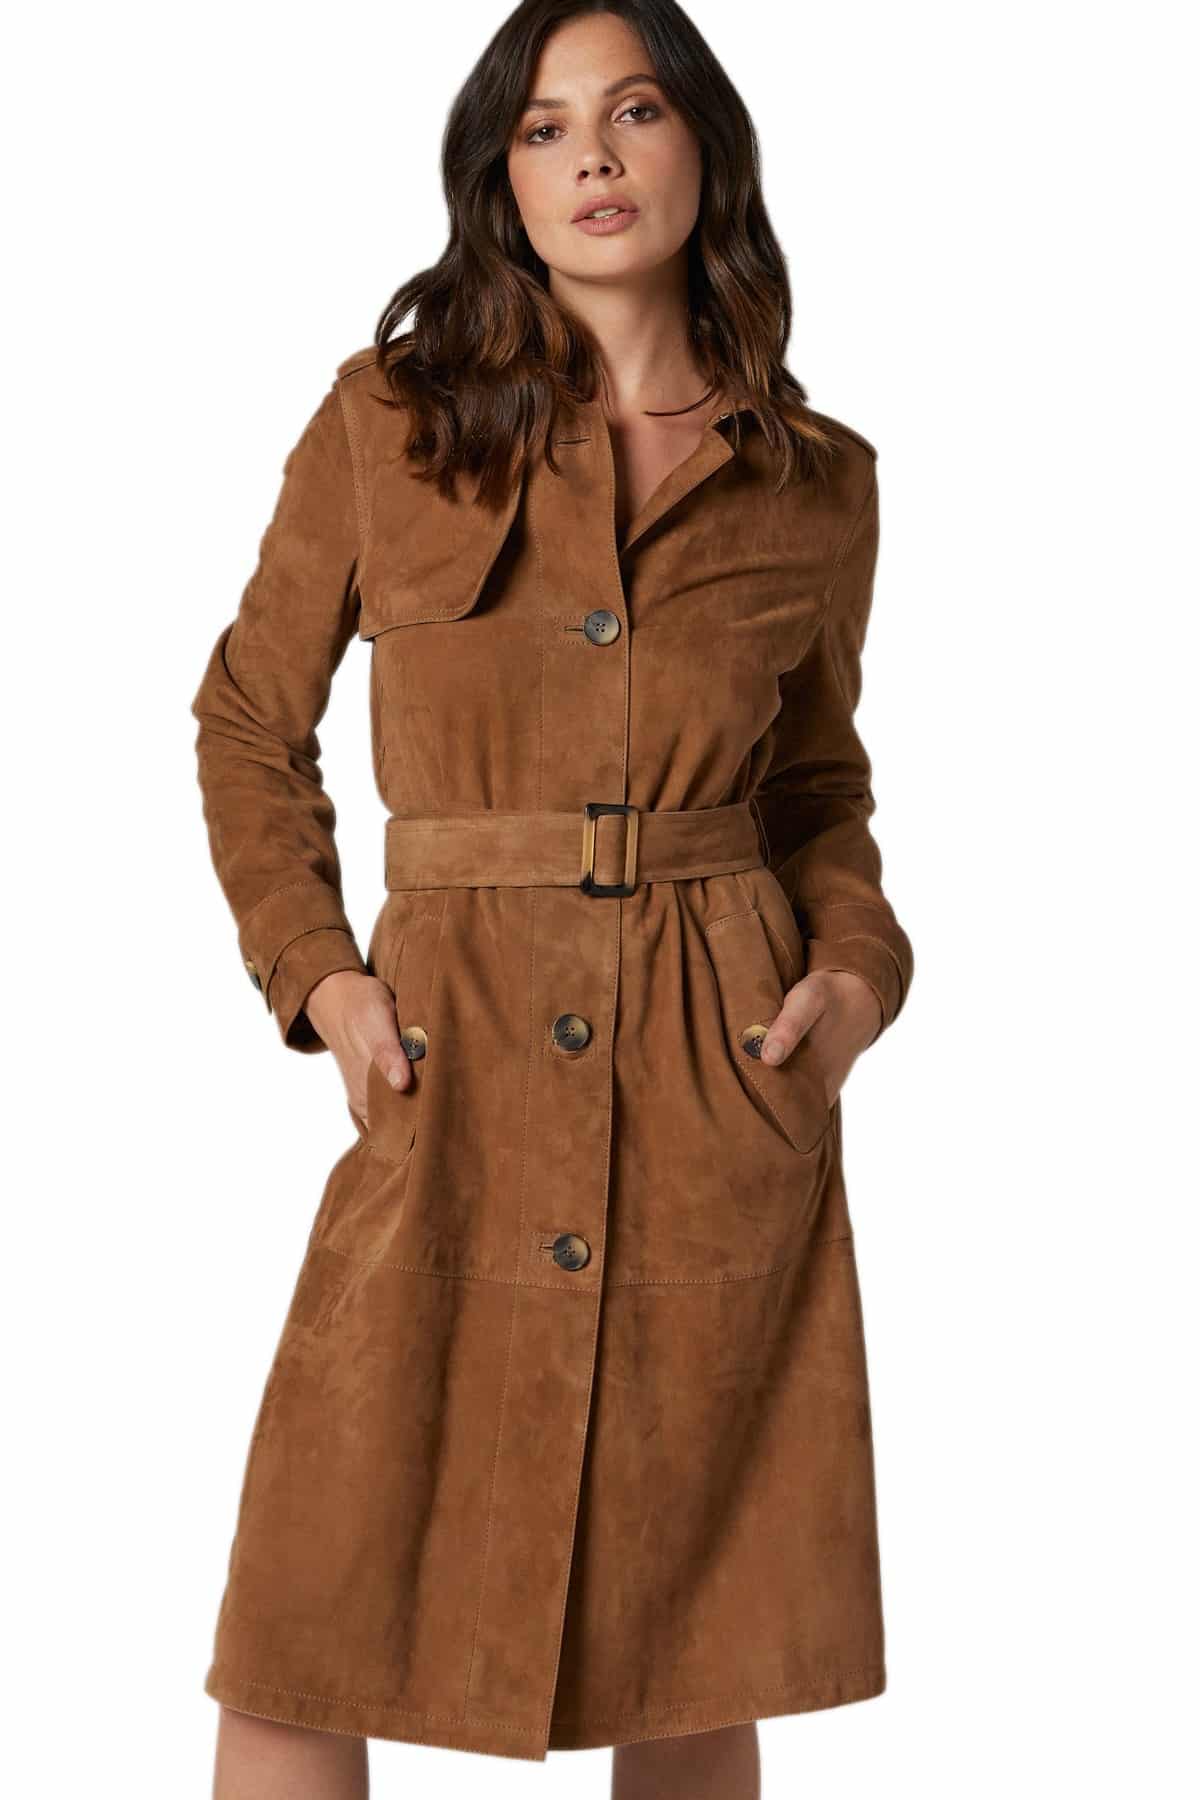 WOMEN FASHION Coats Long coat Suede leather discount 91% Brown M Promod Long coat 